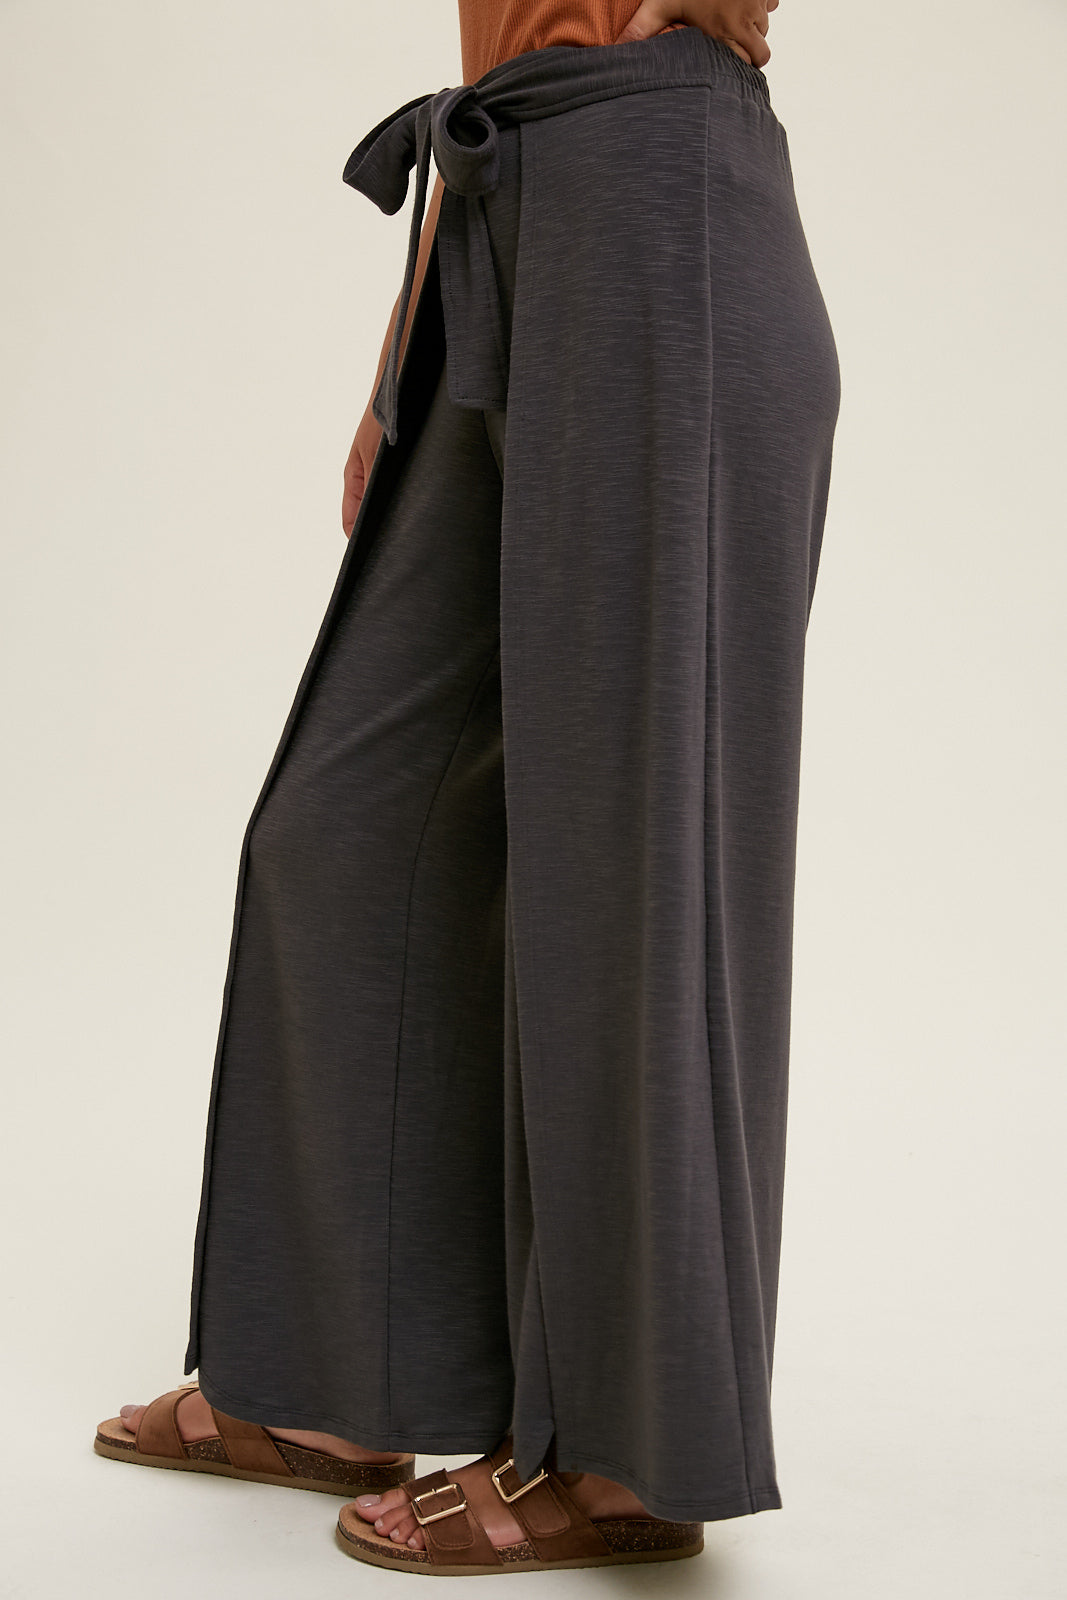 Wishlist® Slub Knit Pants With Slit Detail in Charcoal